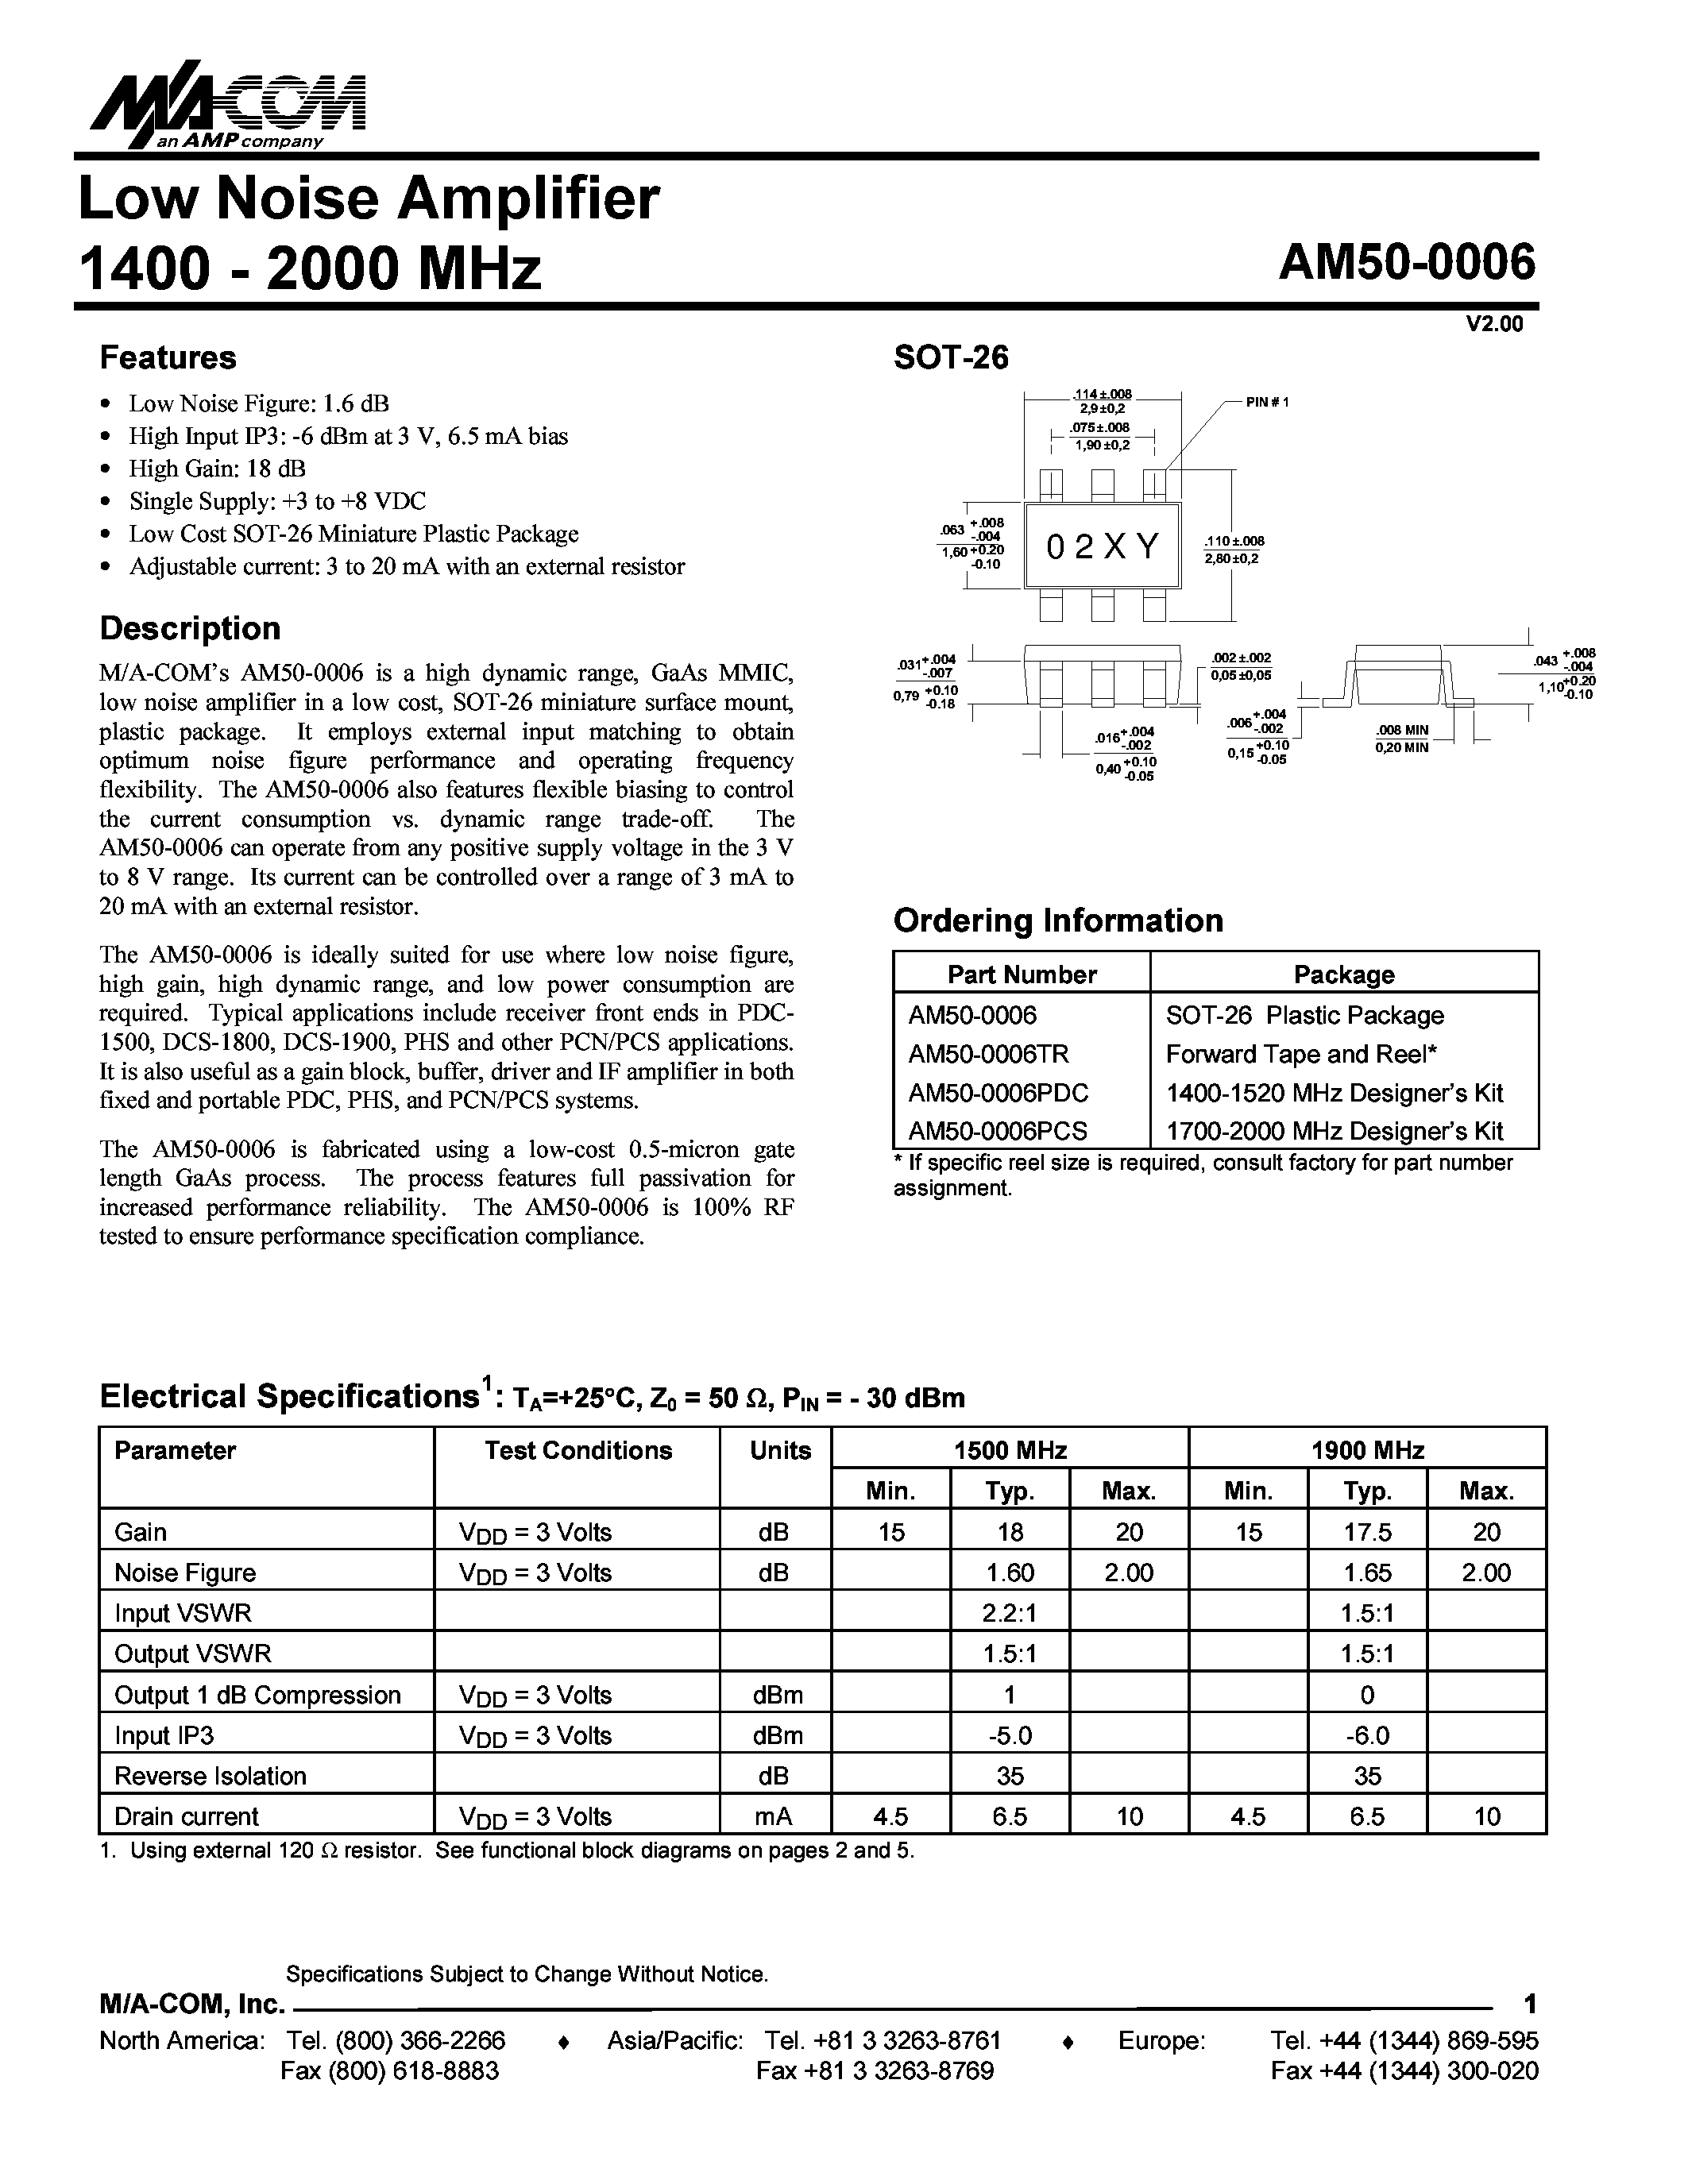 Datasheet AM50-0006 - Low Noise Amplifier 1400 - 2000 MHz page 1